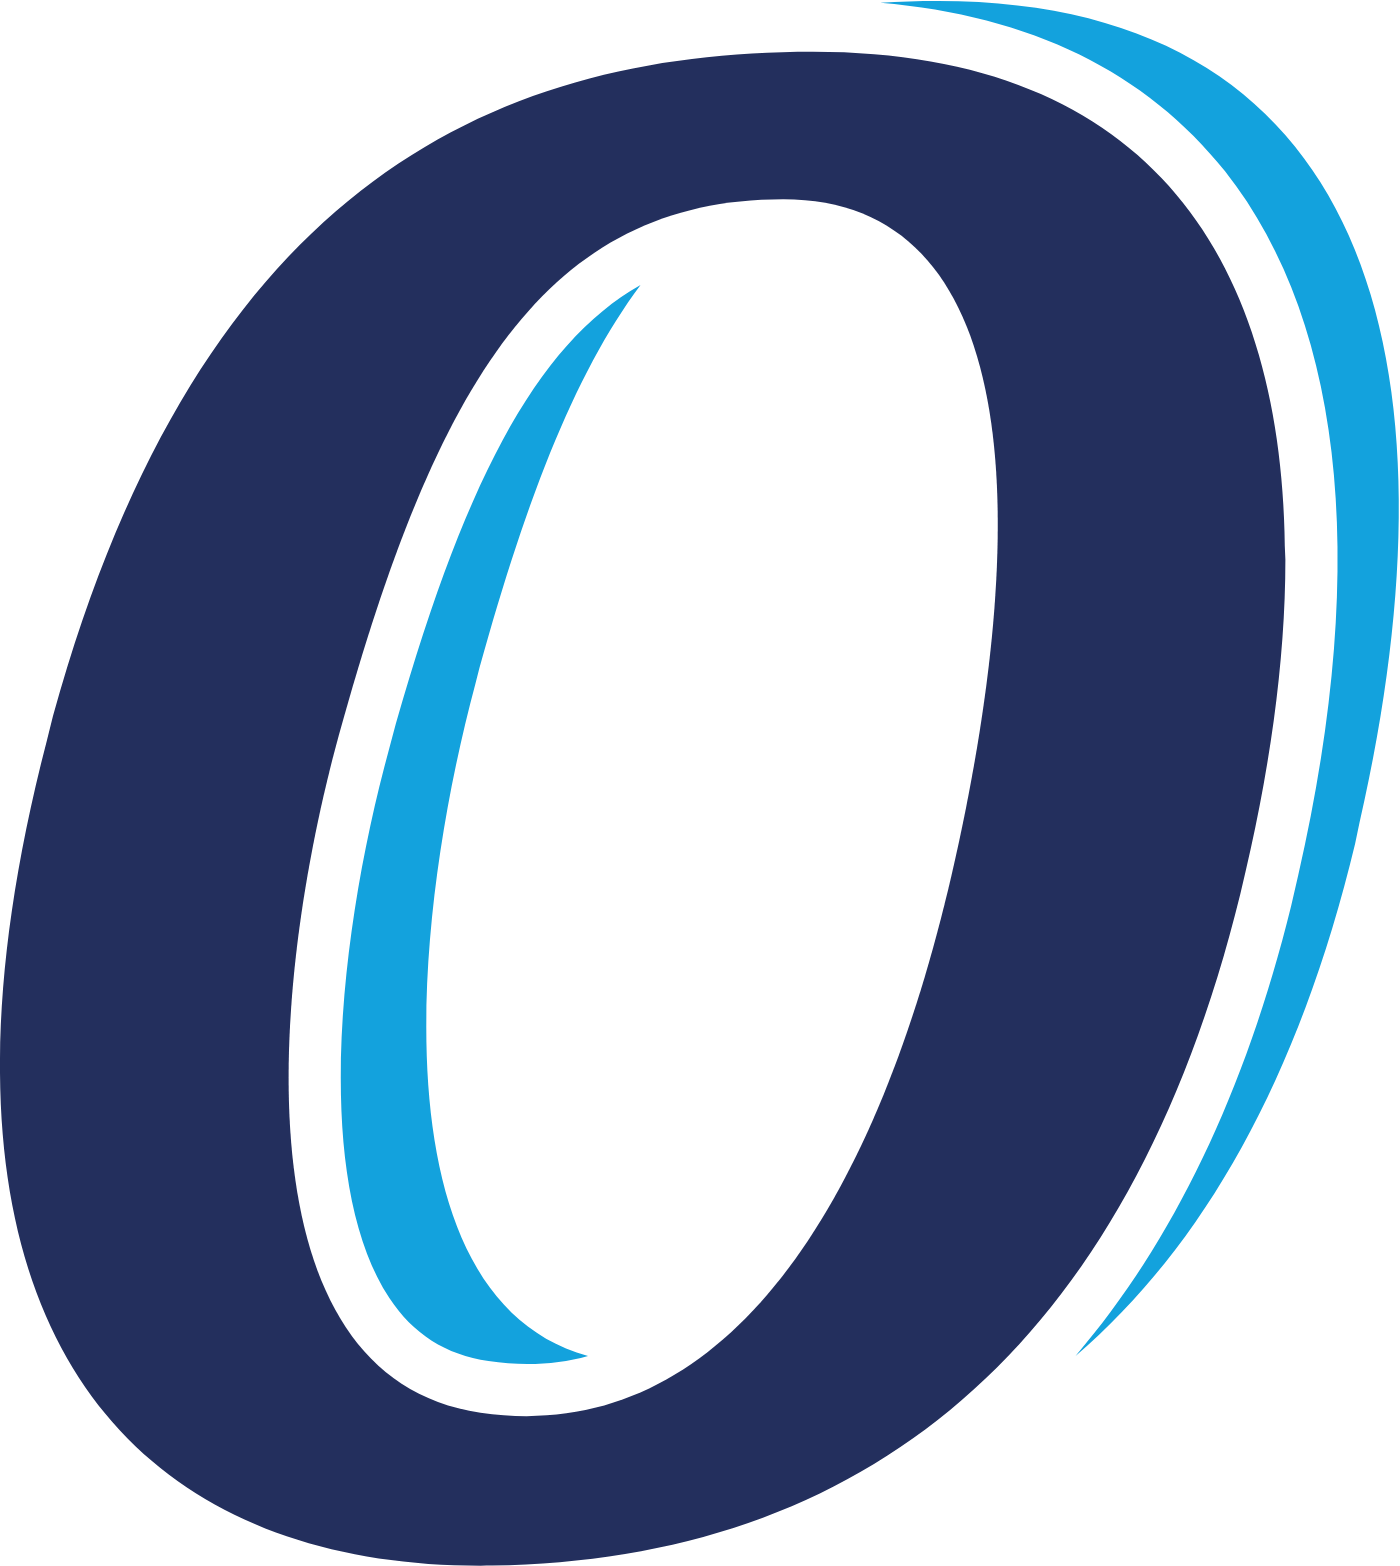 Ontex Group logo (transparent PNG)